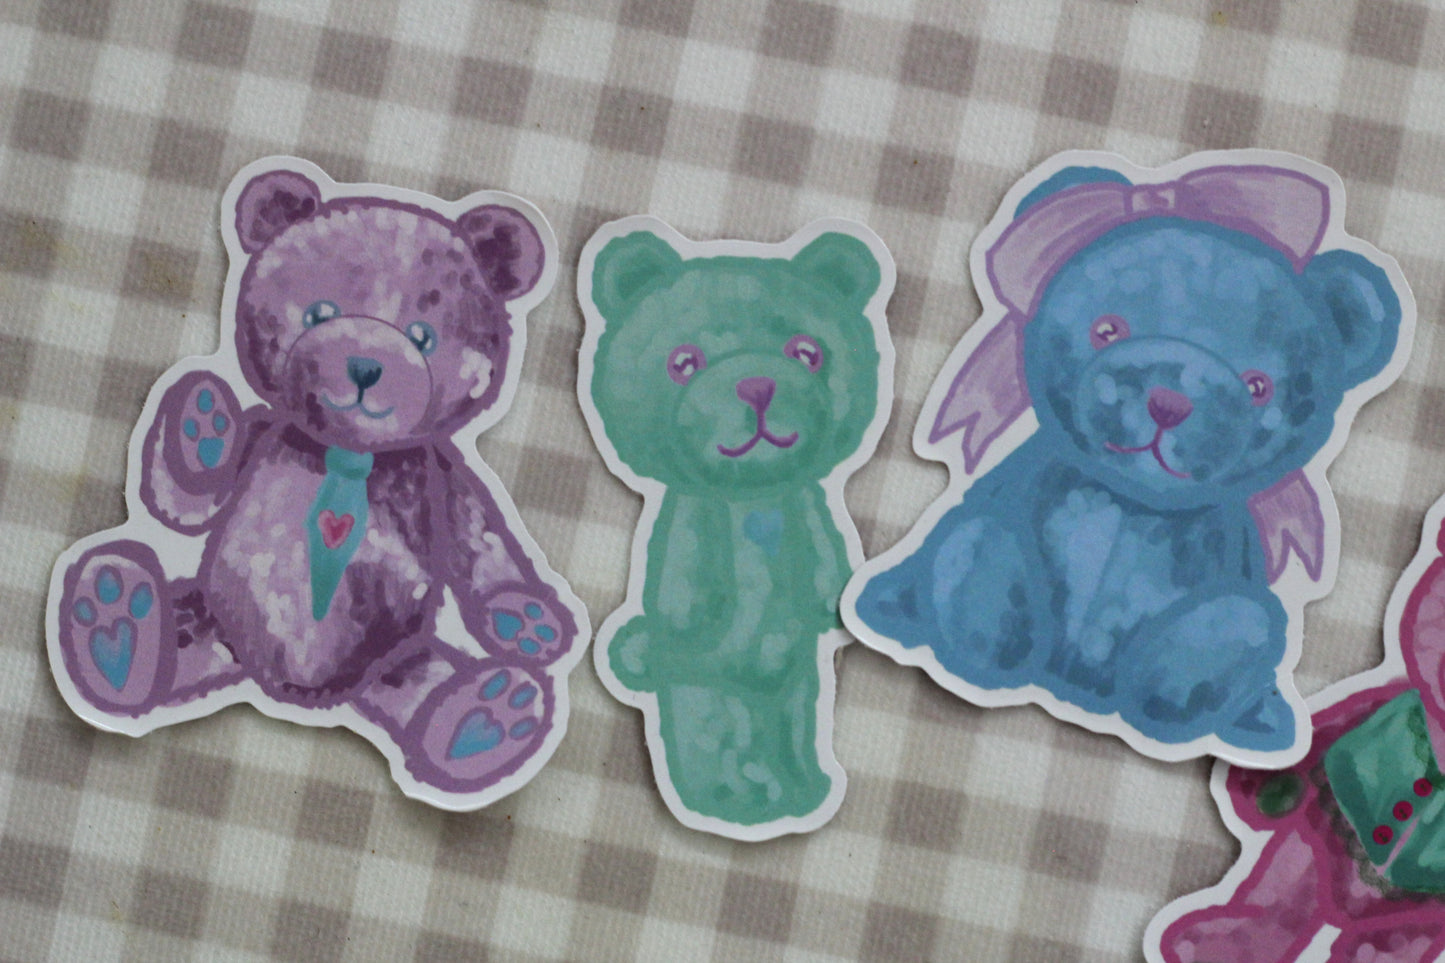 Pastel Teddy Bears, Waterproof Sticker Pack